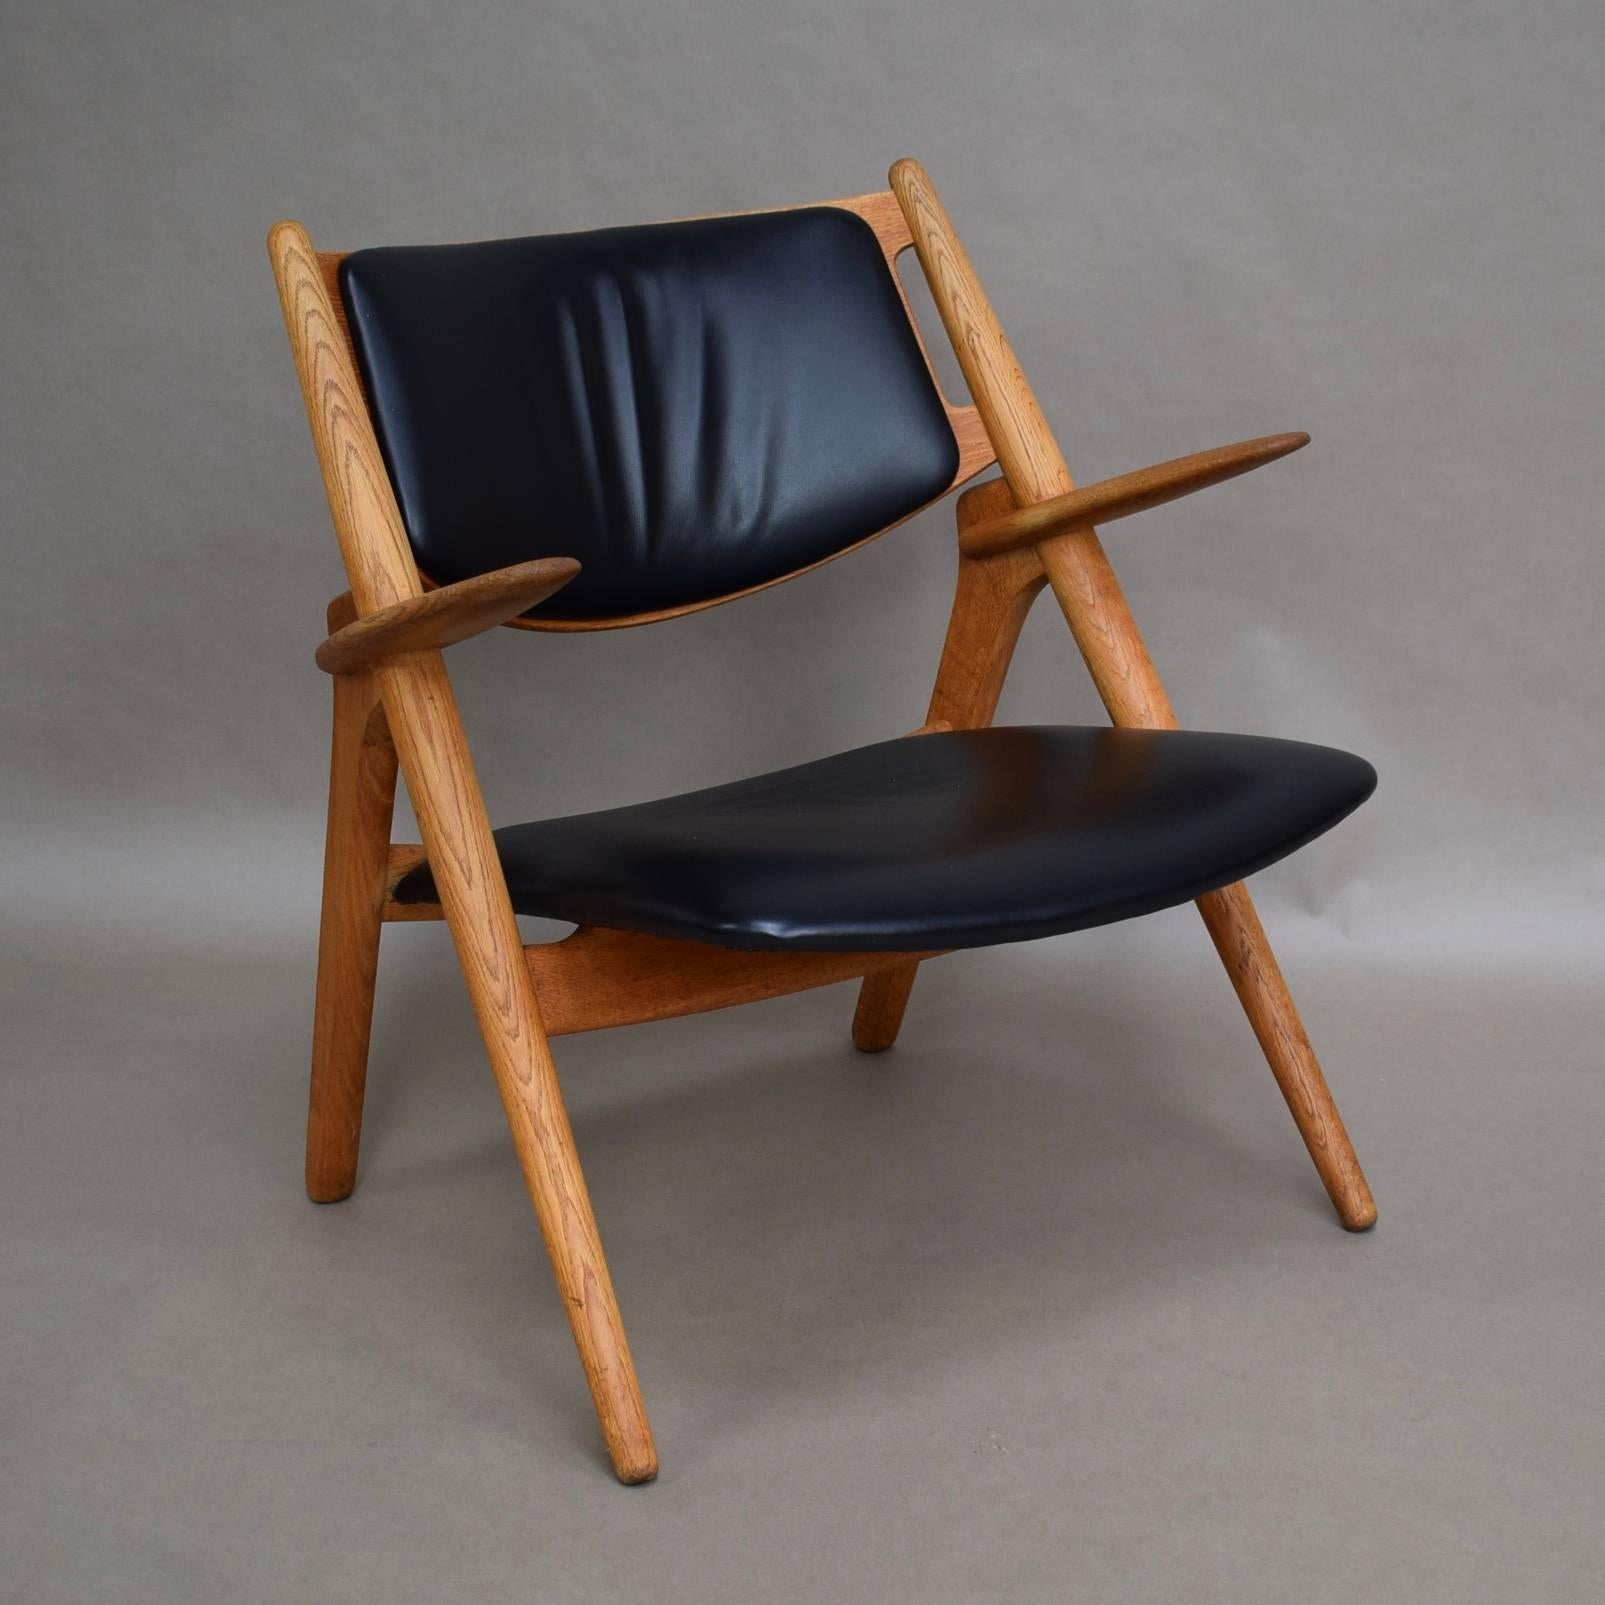 CH28 Sawbuck lounge chair by Hans J. Wegner for Carl Hansen and Son – Denmark.

Manufacturer: Carl Hansen and Son

Designer: Hans J. Wegner

Country: Denmark

Model: CH-28 Sawbuck lounge chair

Material: Teak / oak / black leather

Design period: